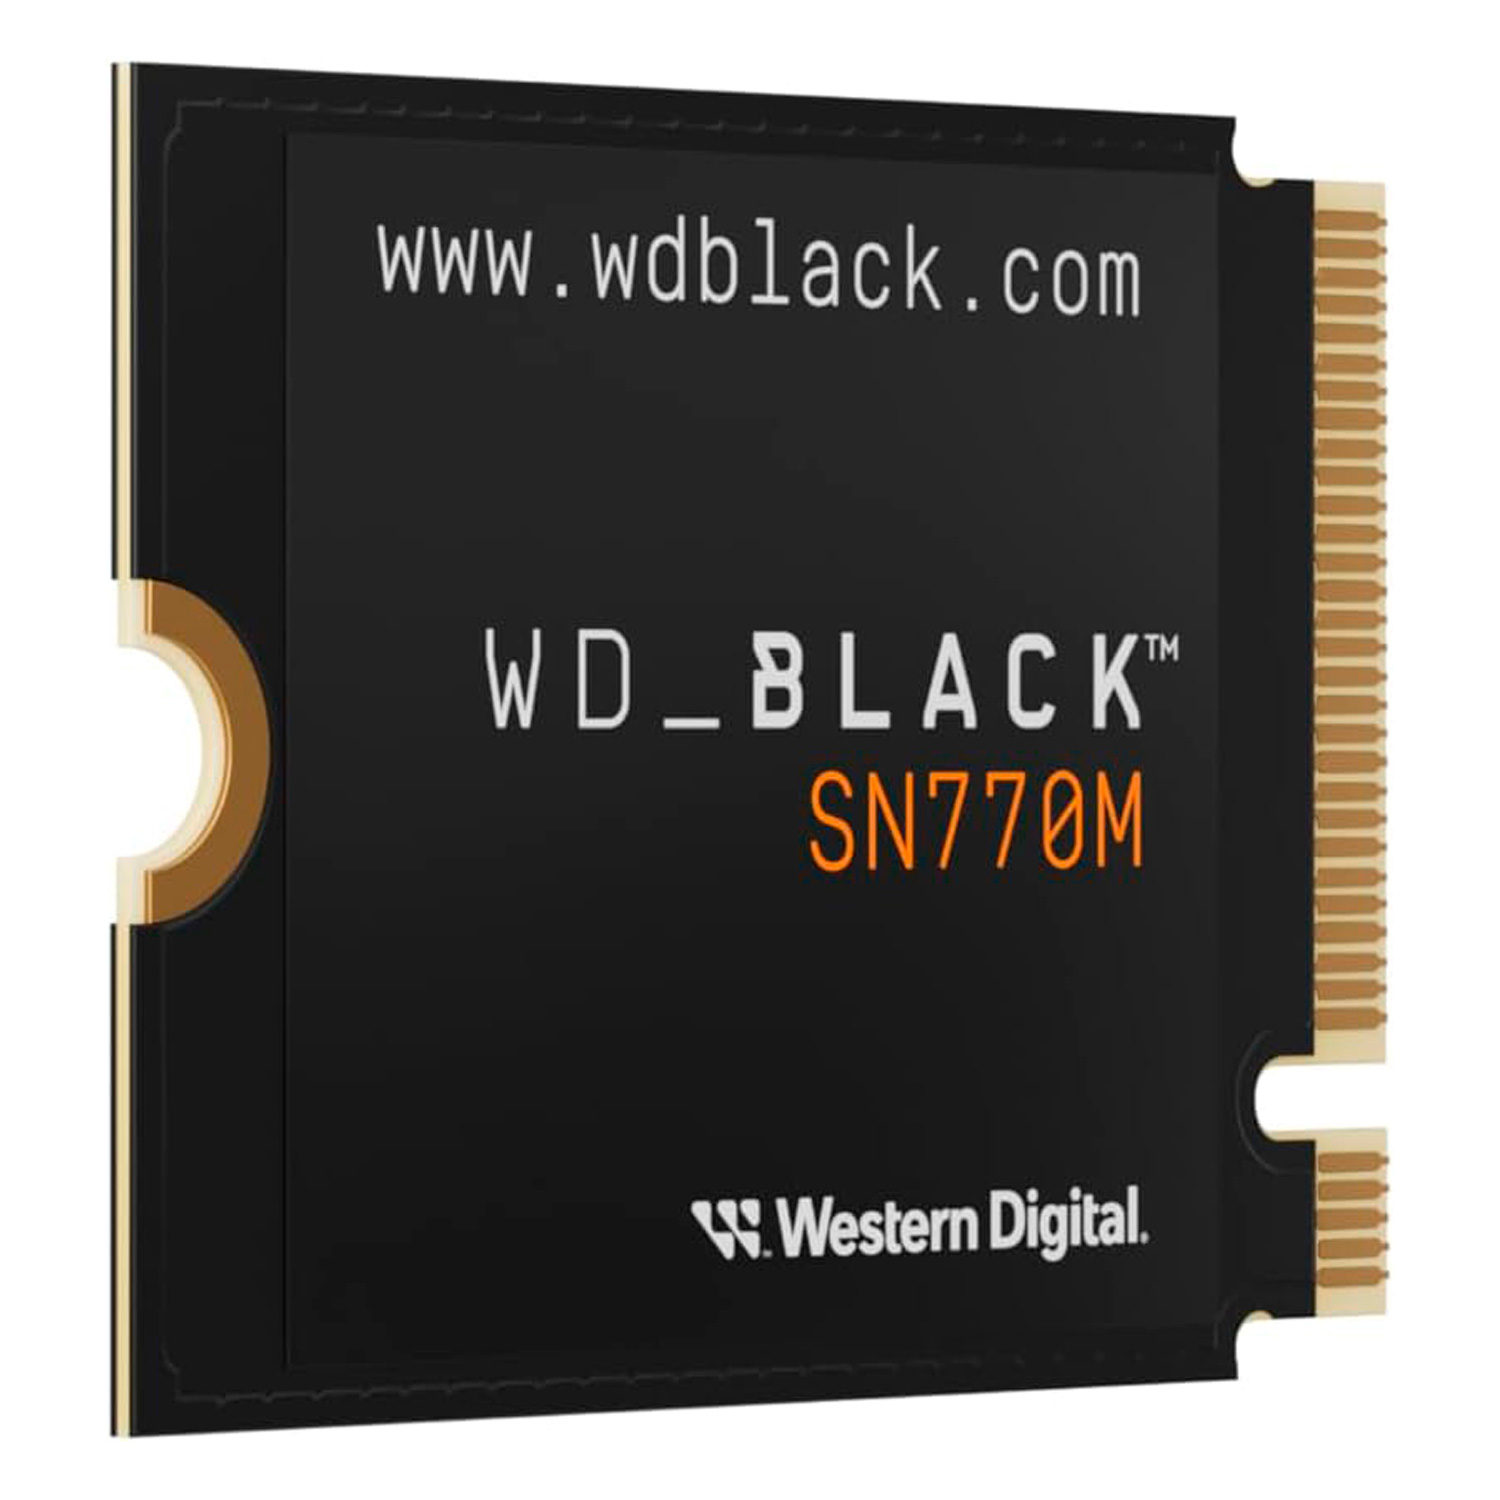 SSD M.2 Western Digital SN770M Black 2TB NVMe PCIe Gen 4 - WDS200T3X0G